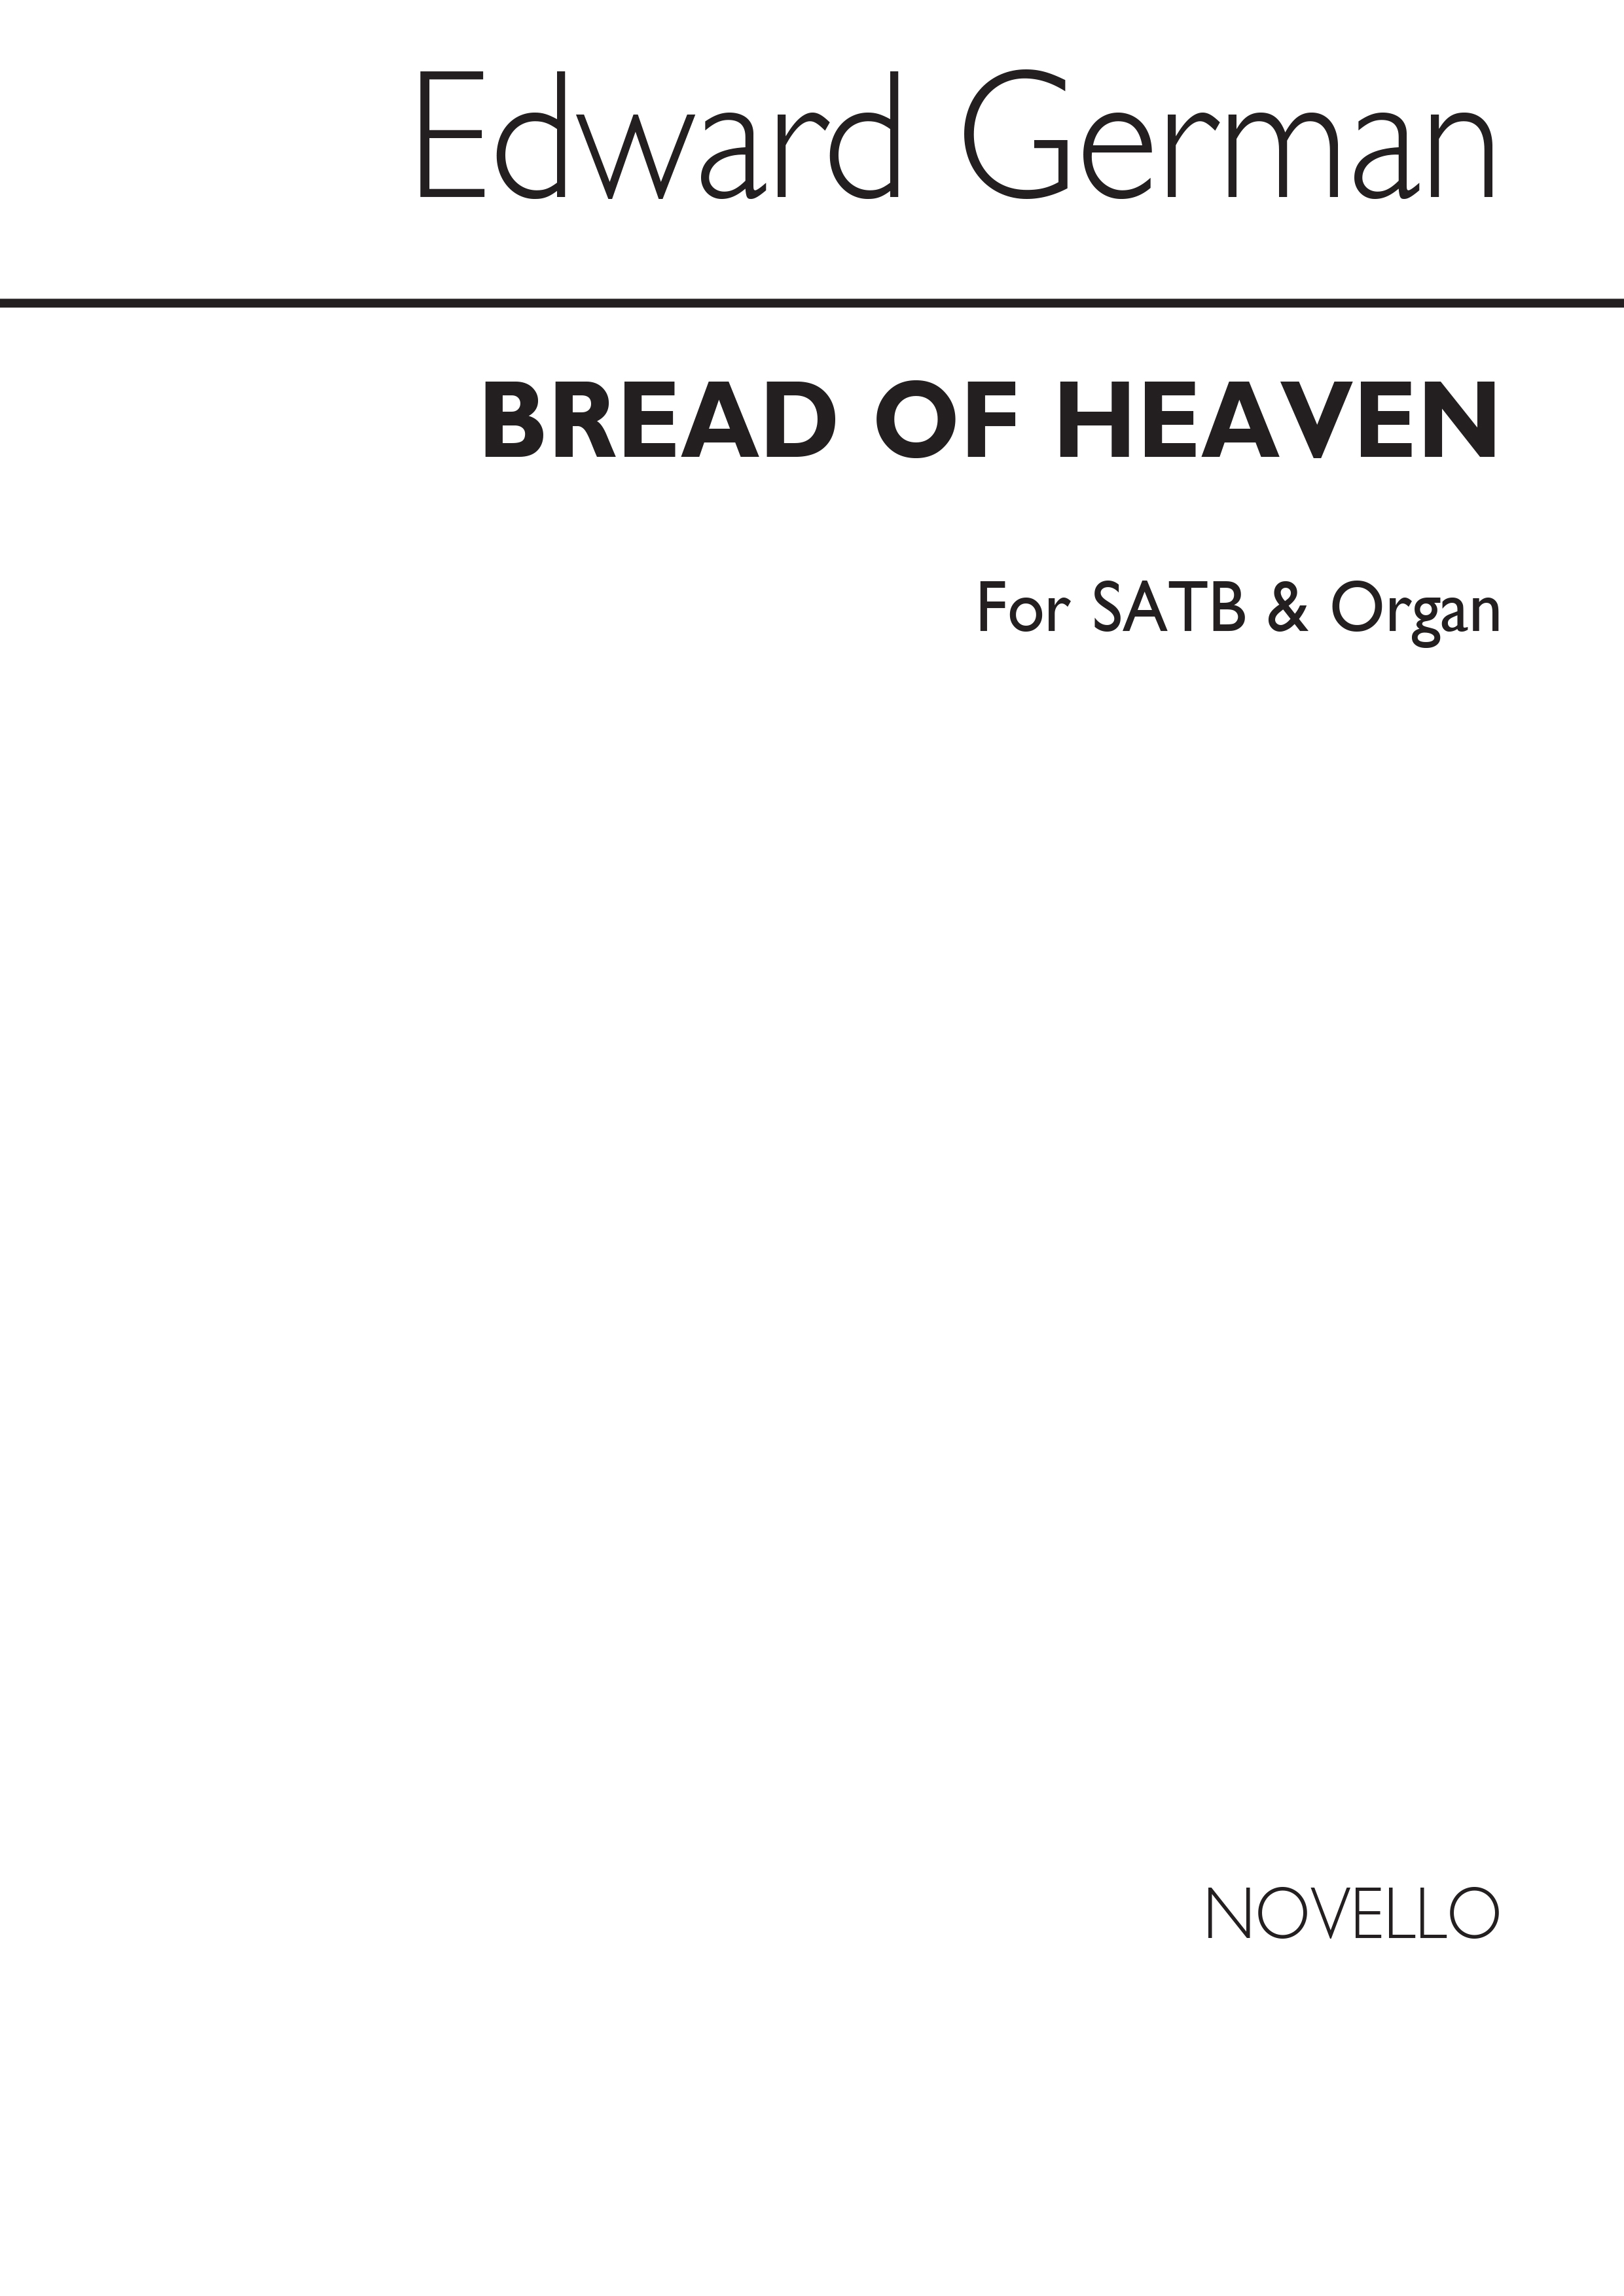 Edward German: Bread Of Heaven, On Thee We Feed (SATB)